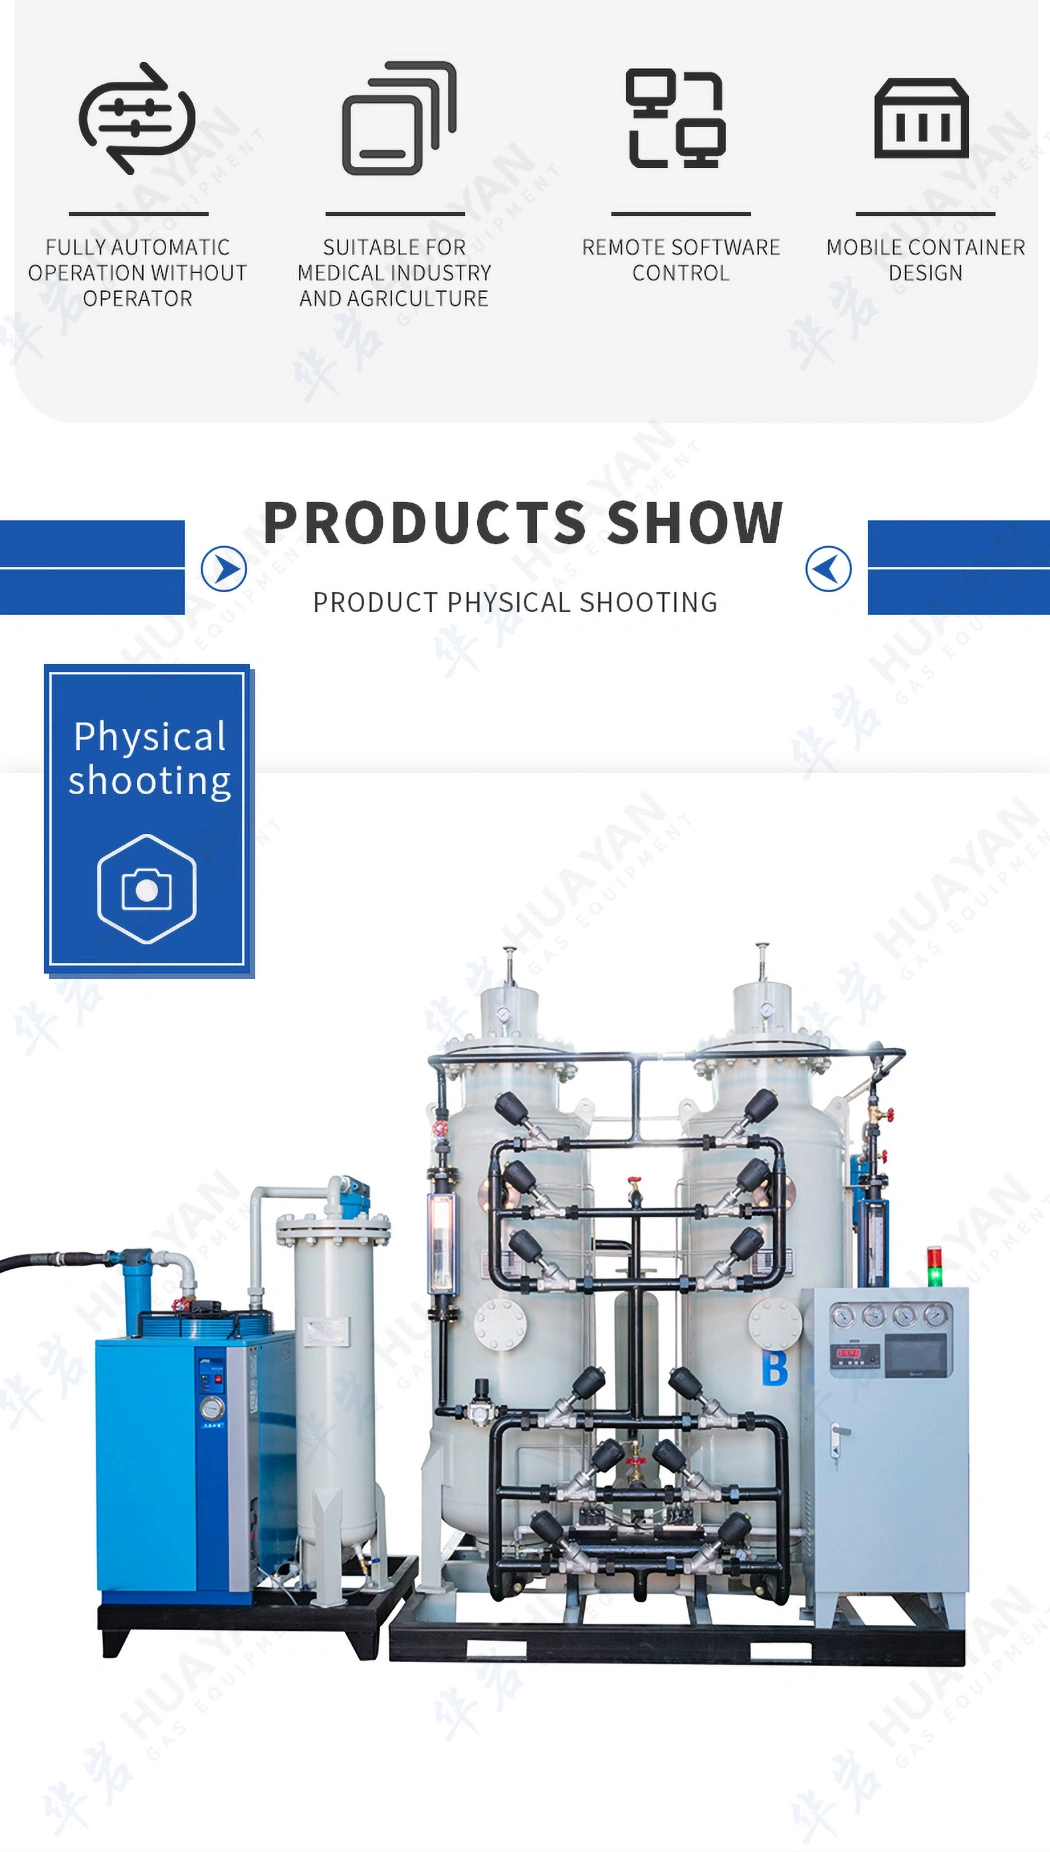 Hyo-15 Industrial High Efficiency Oxygen Machine Psa O2 Plant Oxygen Generator